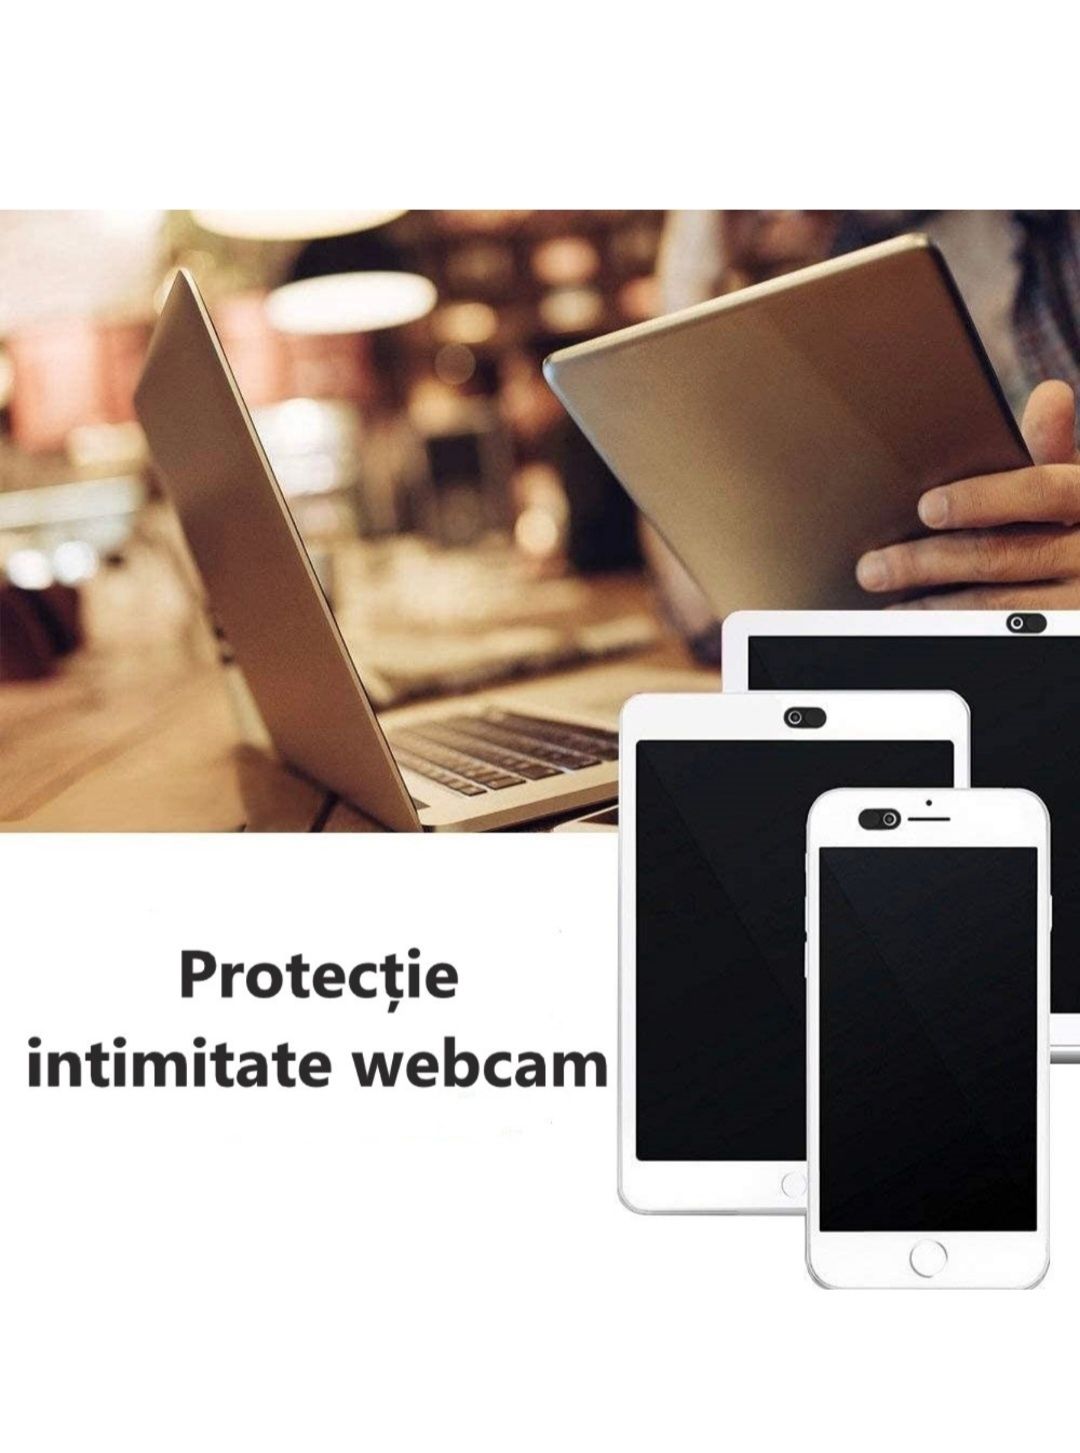 Vând protecție intimitate webcam